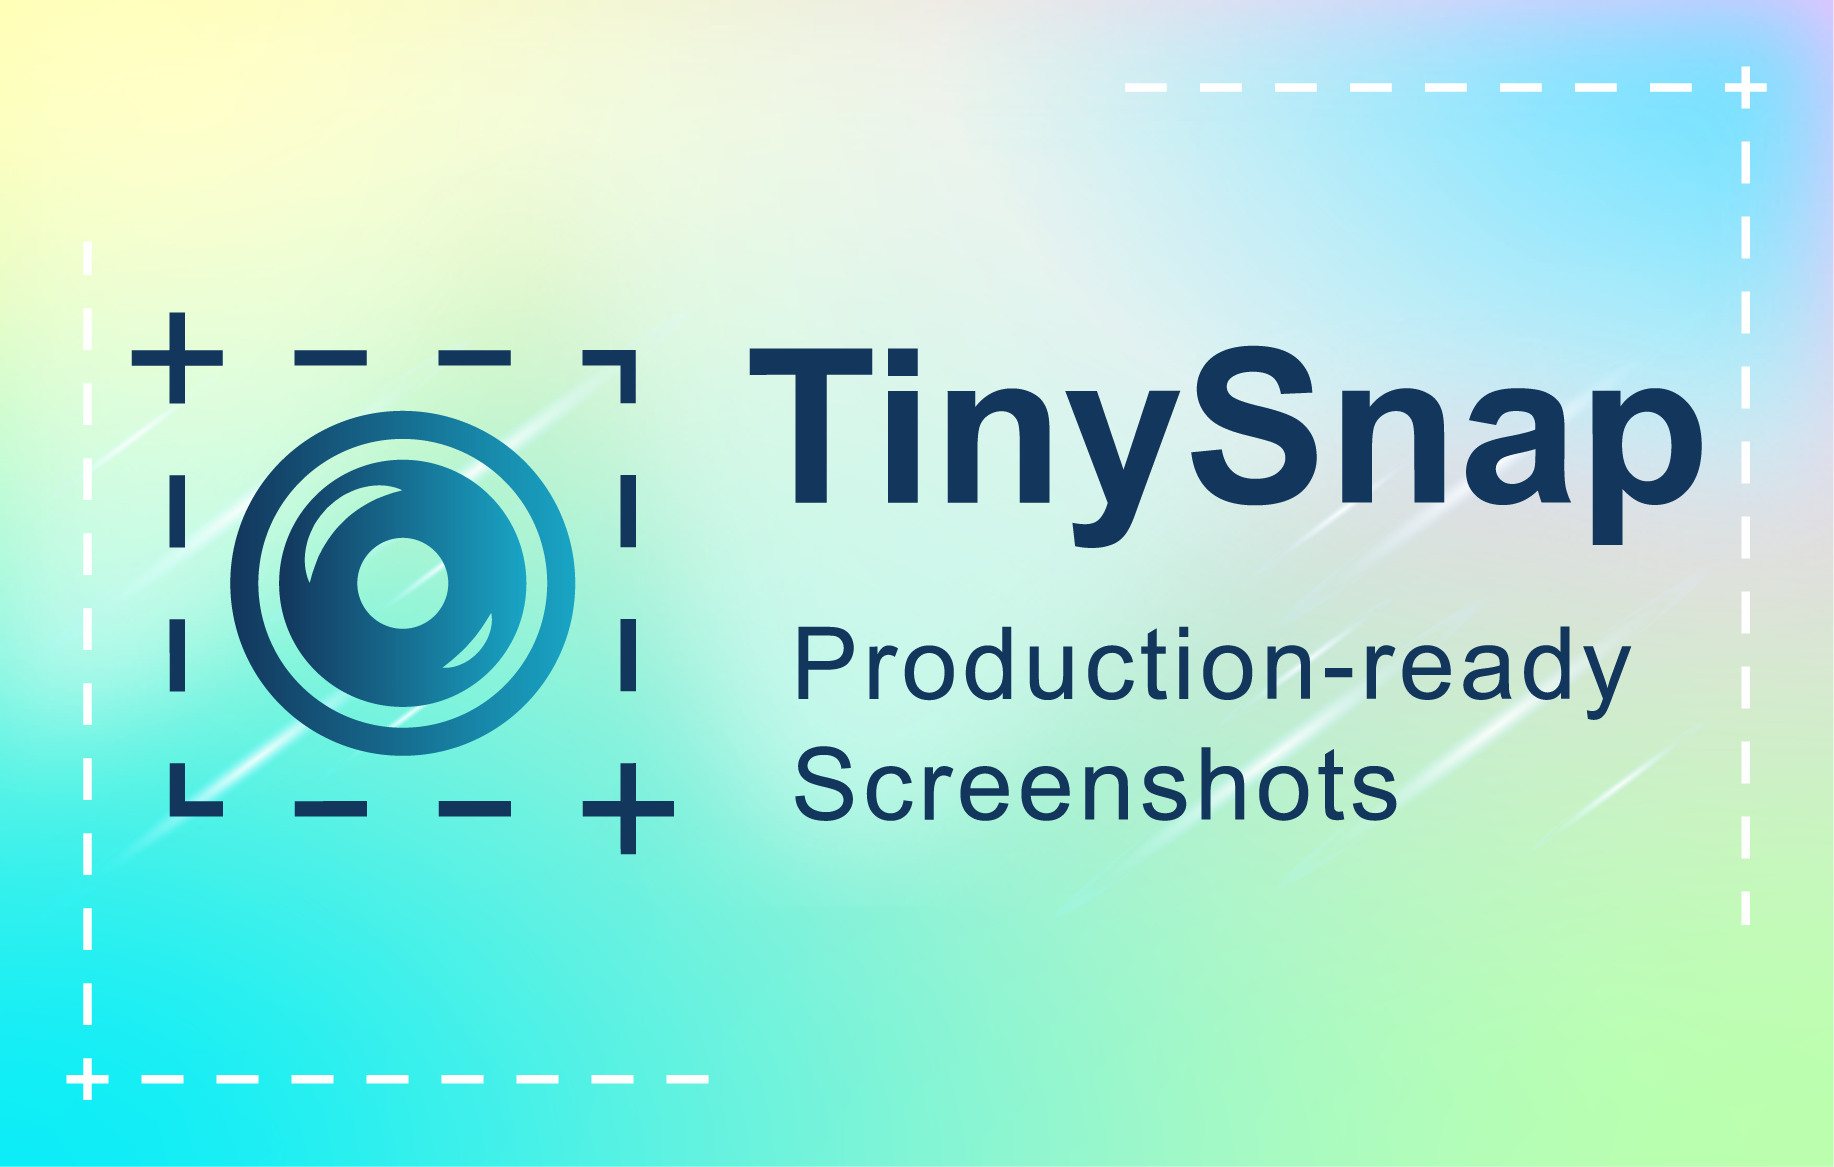 TinySnap (Production-ready Screenshot Tool)